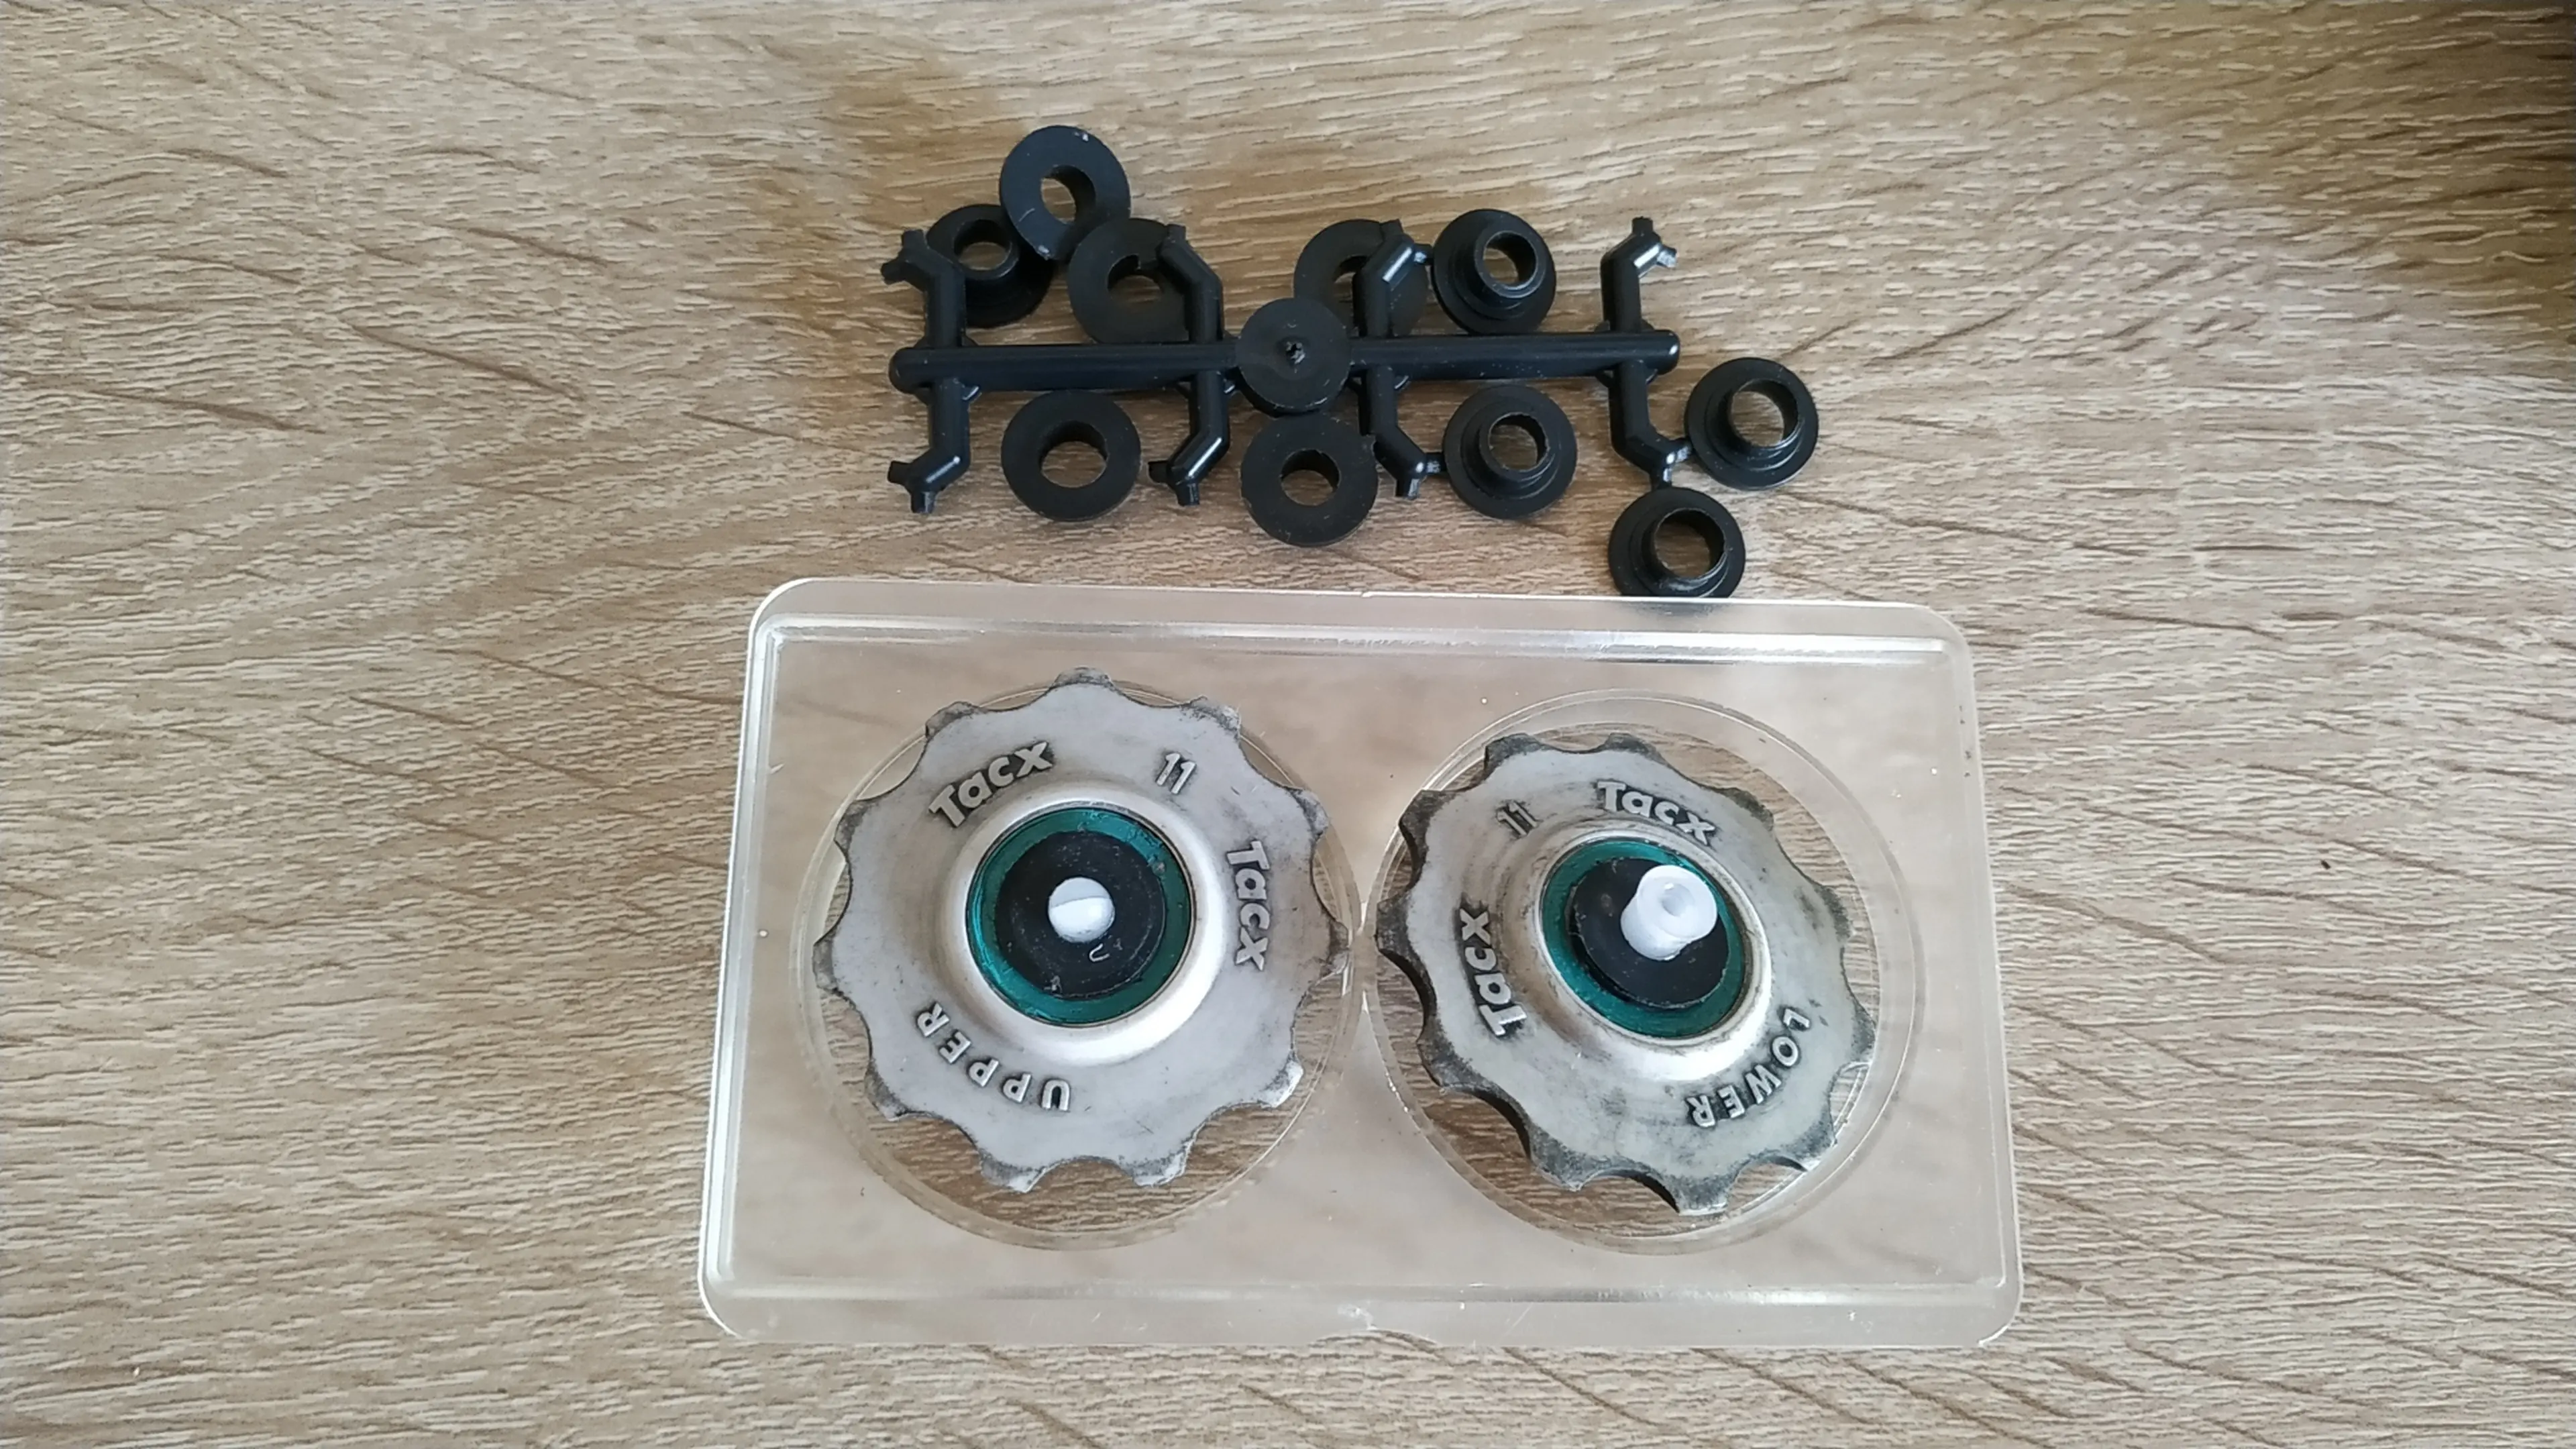 3. Rotite deraior/Jockey wheels ceramic ball bearings